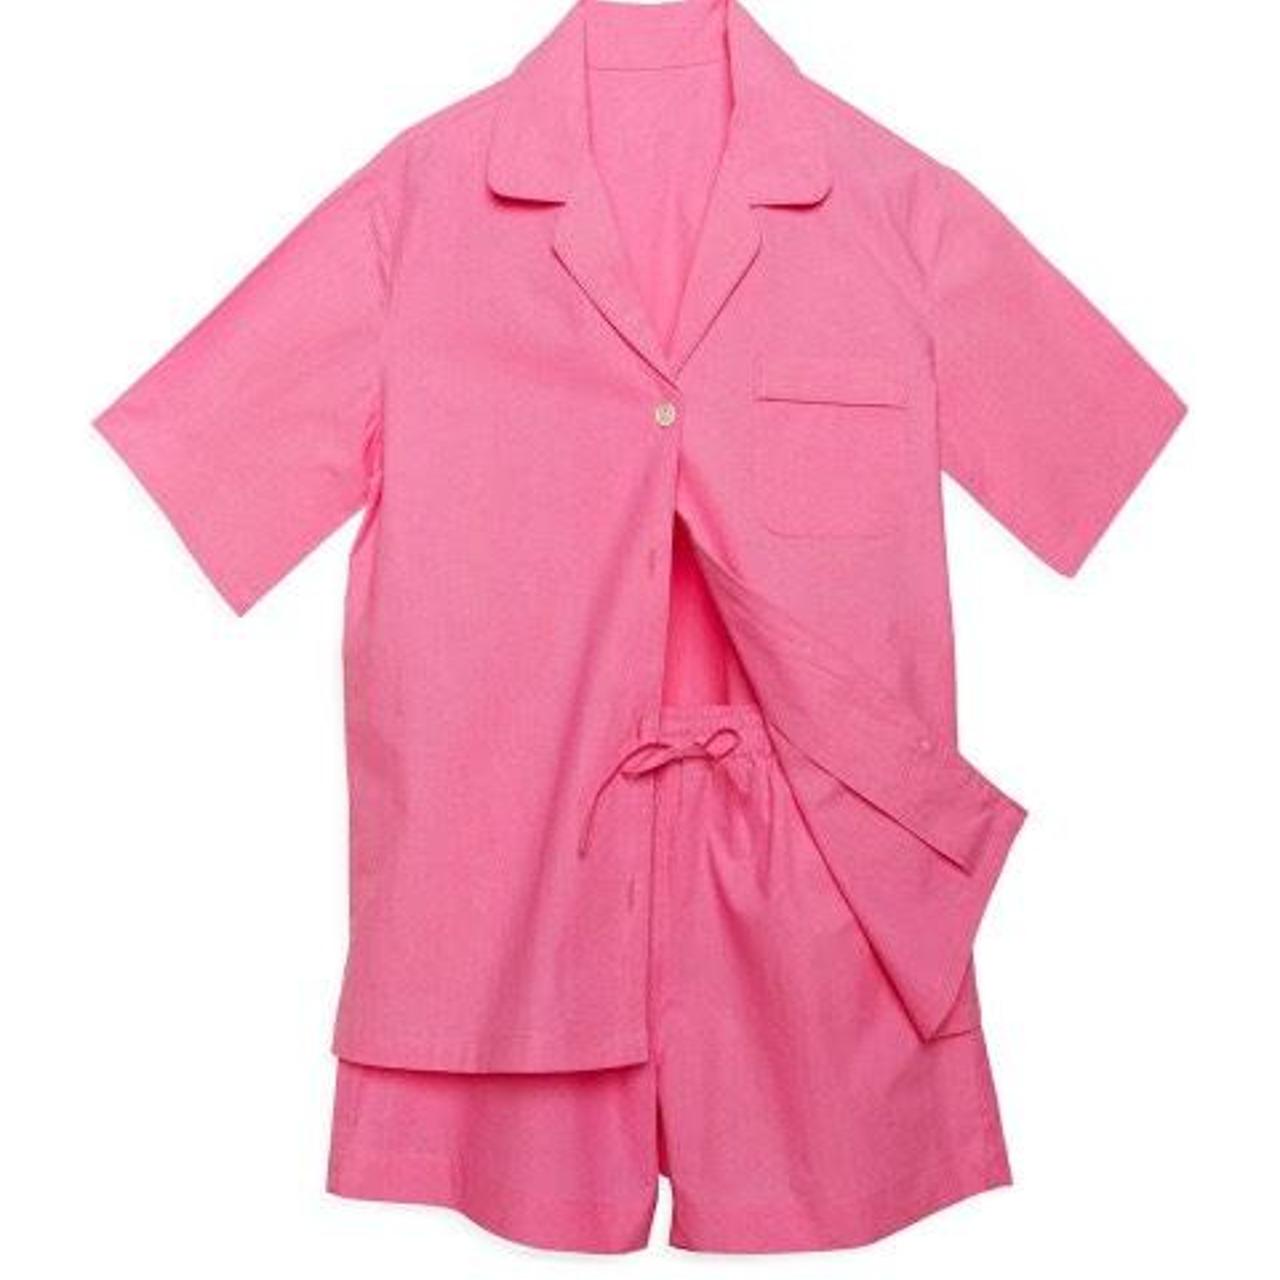 Super cute woman’s summer pink pyjamas Perfect for... - Depop